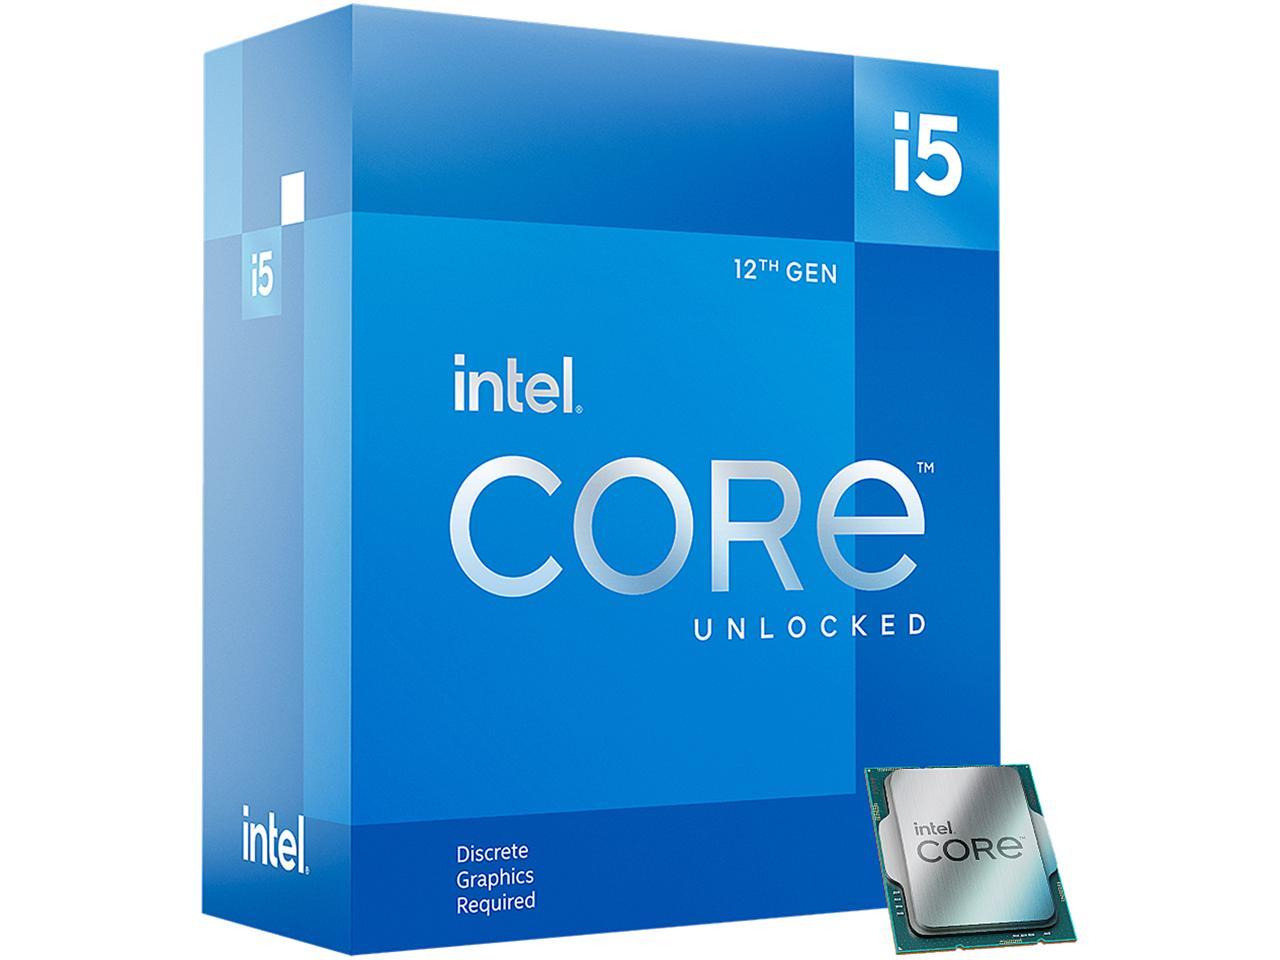 Intel Core i5-12600KF 10-Core (6P + 4E) 125-Watt Desktop Processor + Free Shipping $154.99